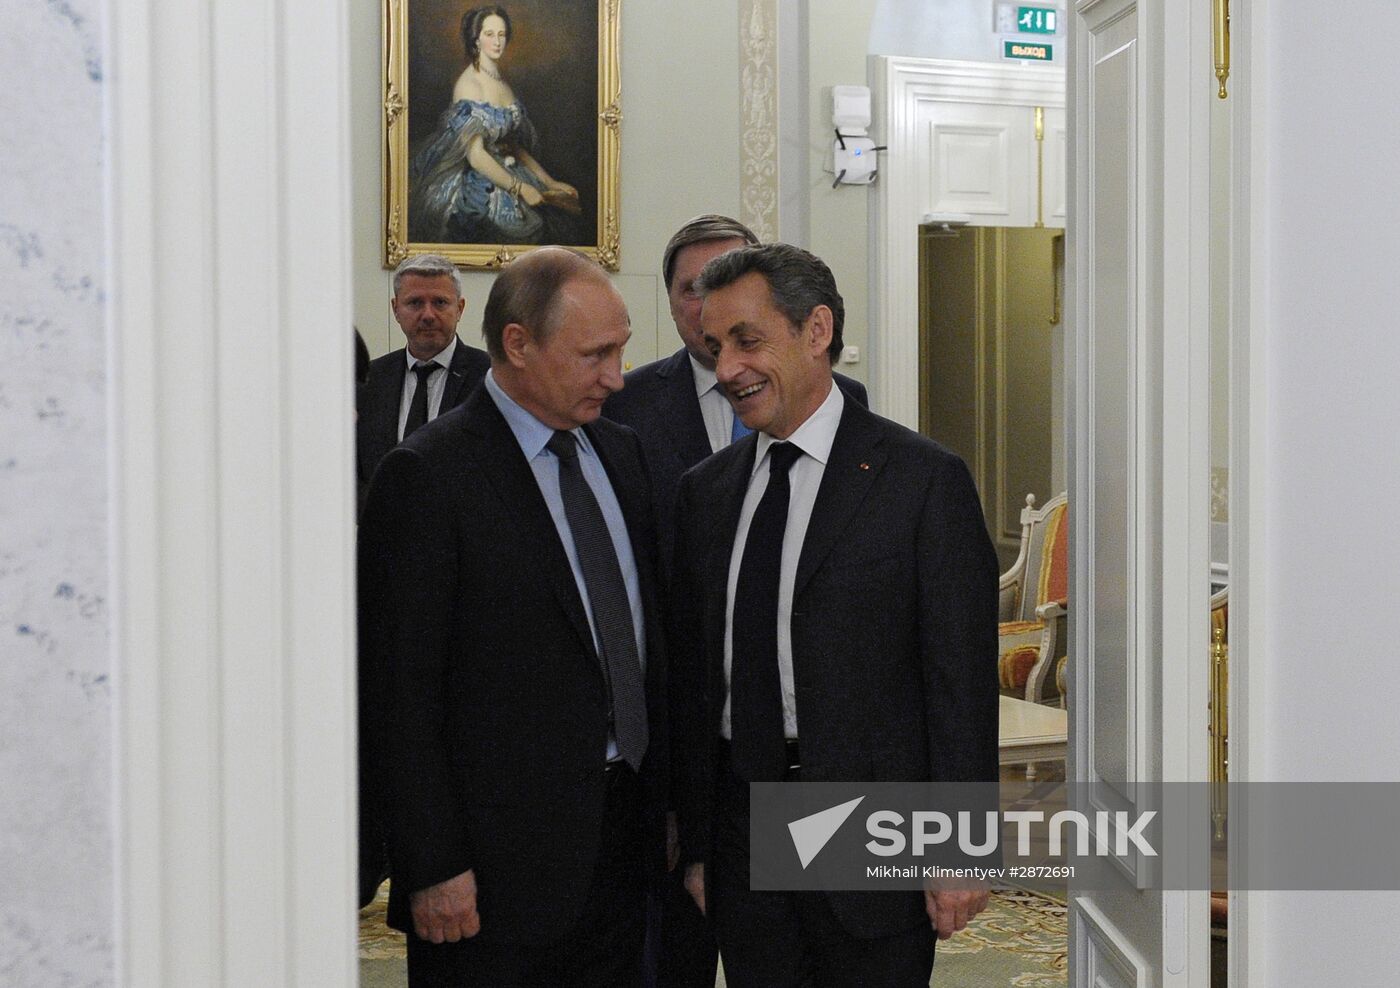 Vladimir Putin's informal dinner with former French president Nicolas Sarkozy